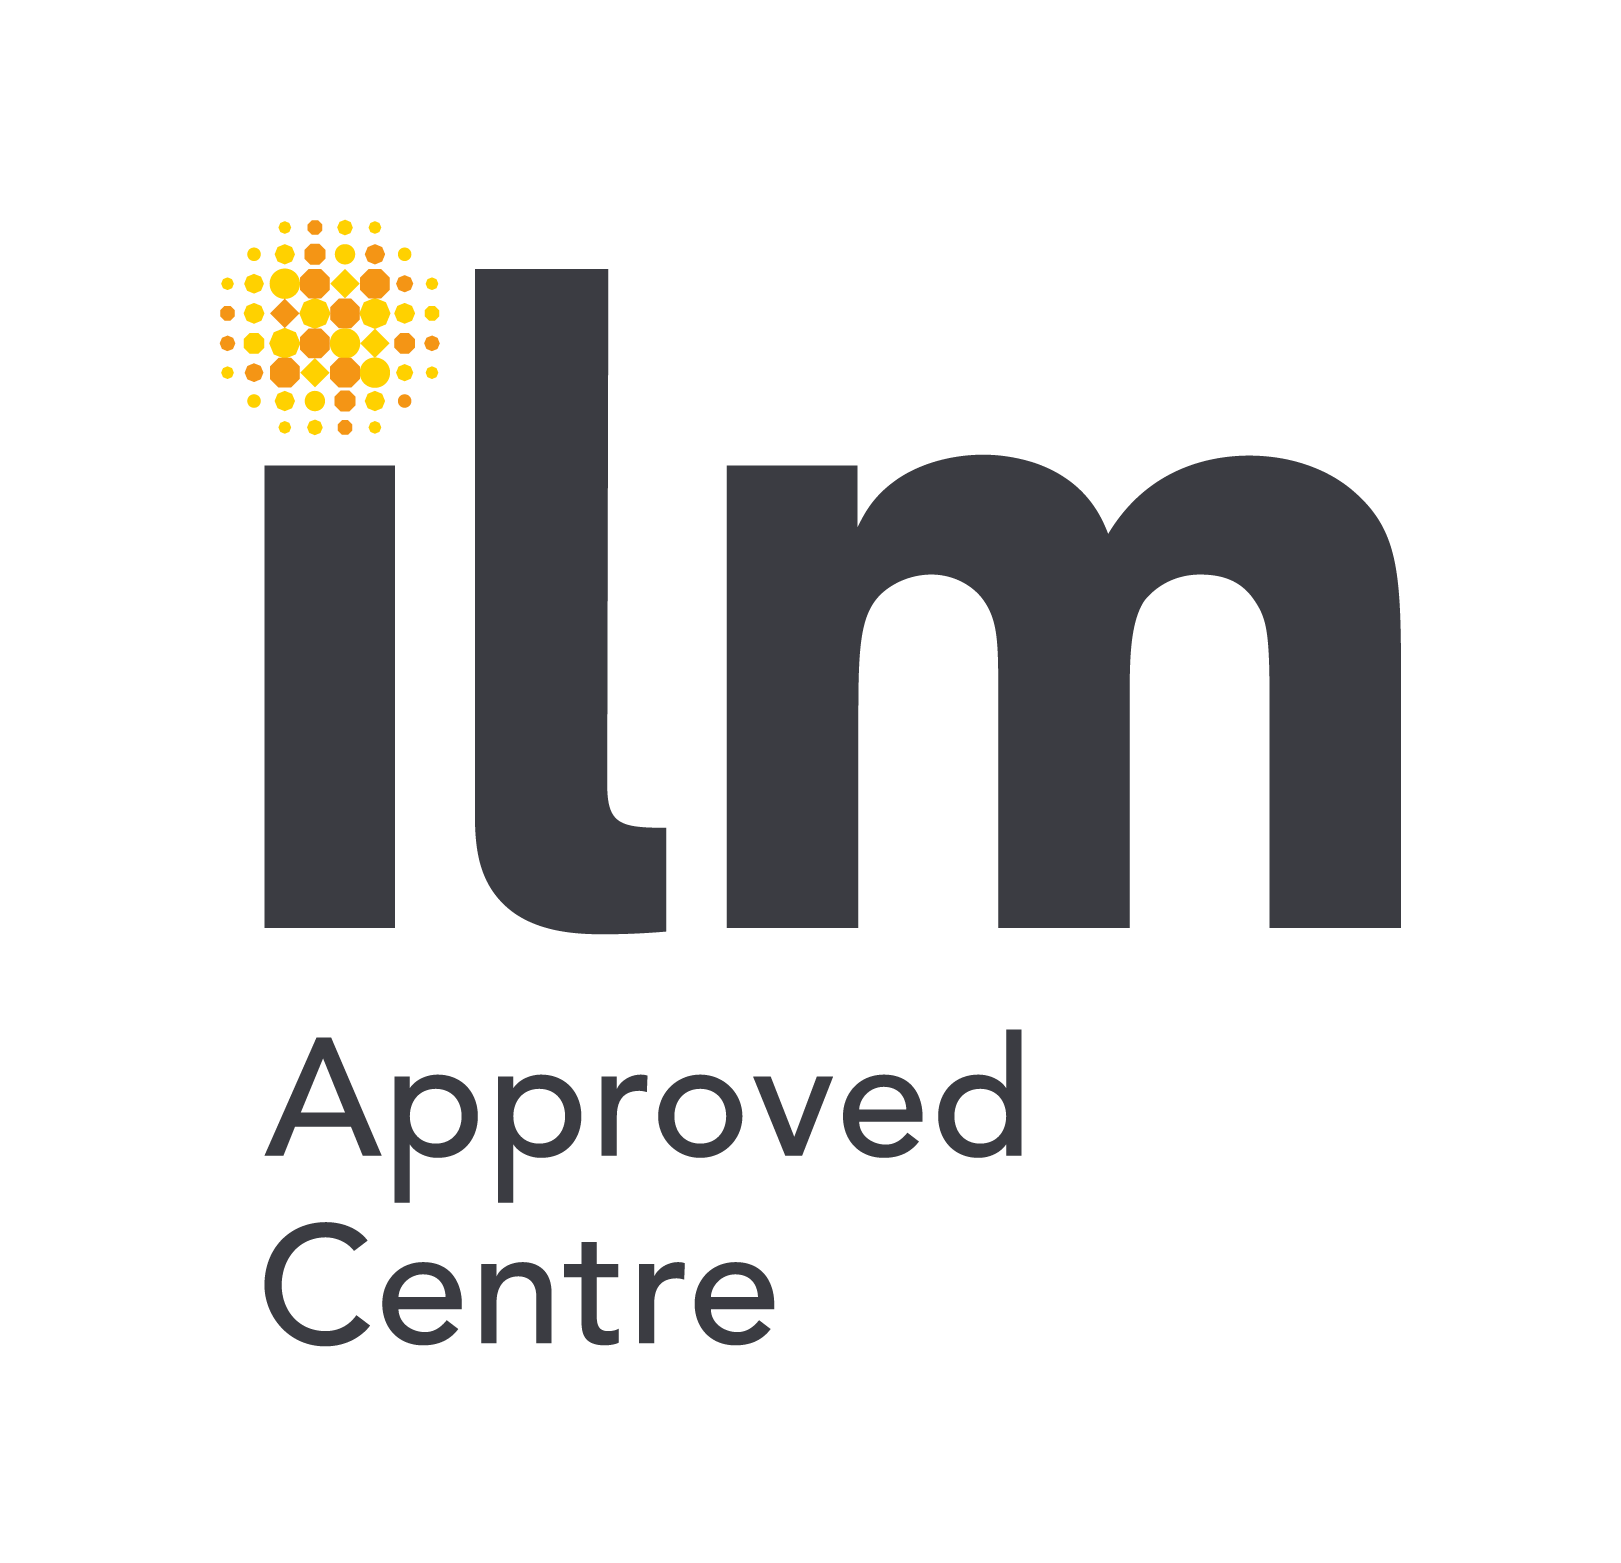 ILM Logo - ILM Logo 2017 High Resolution